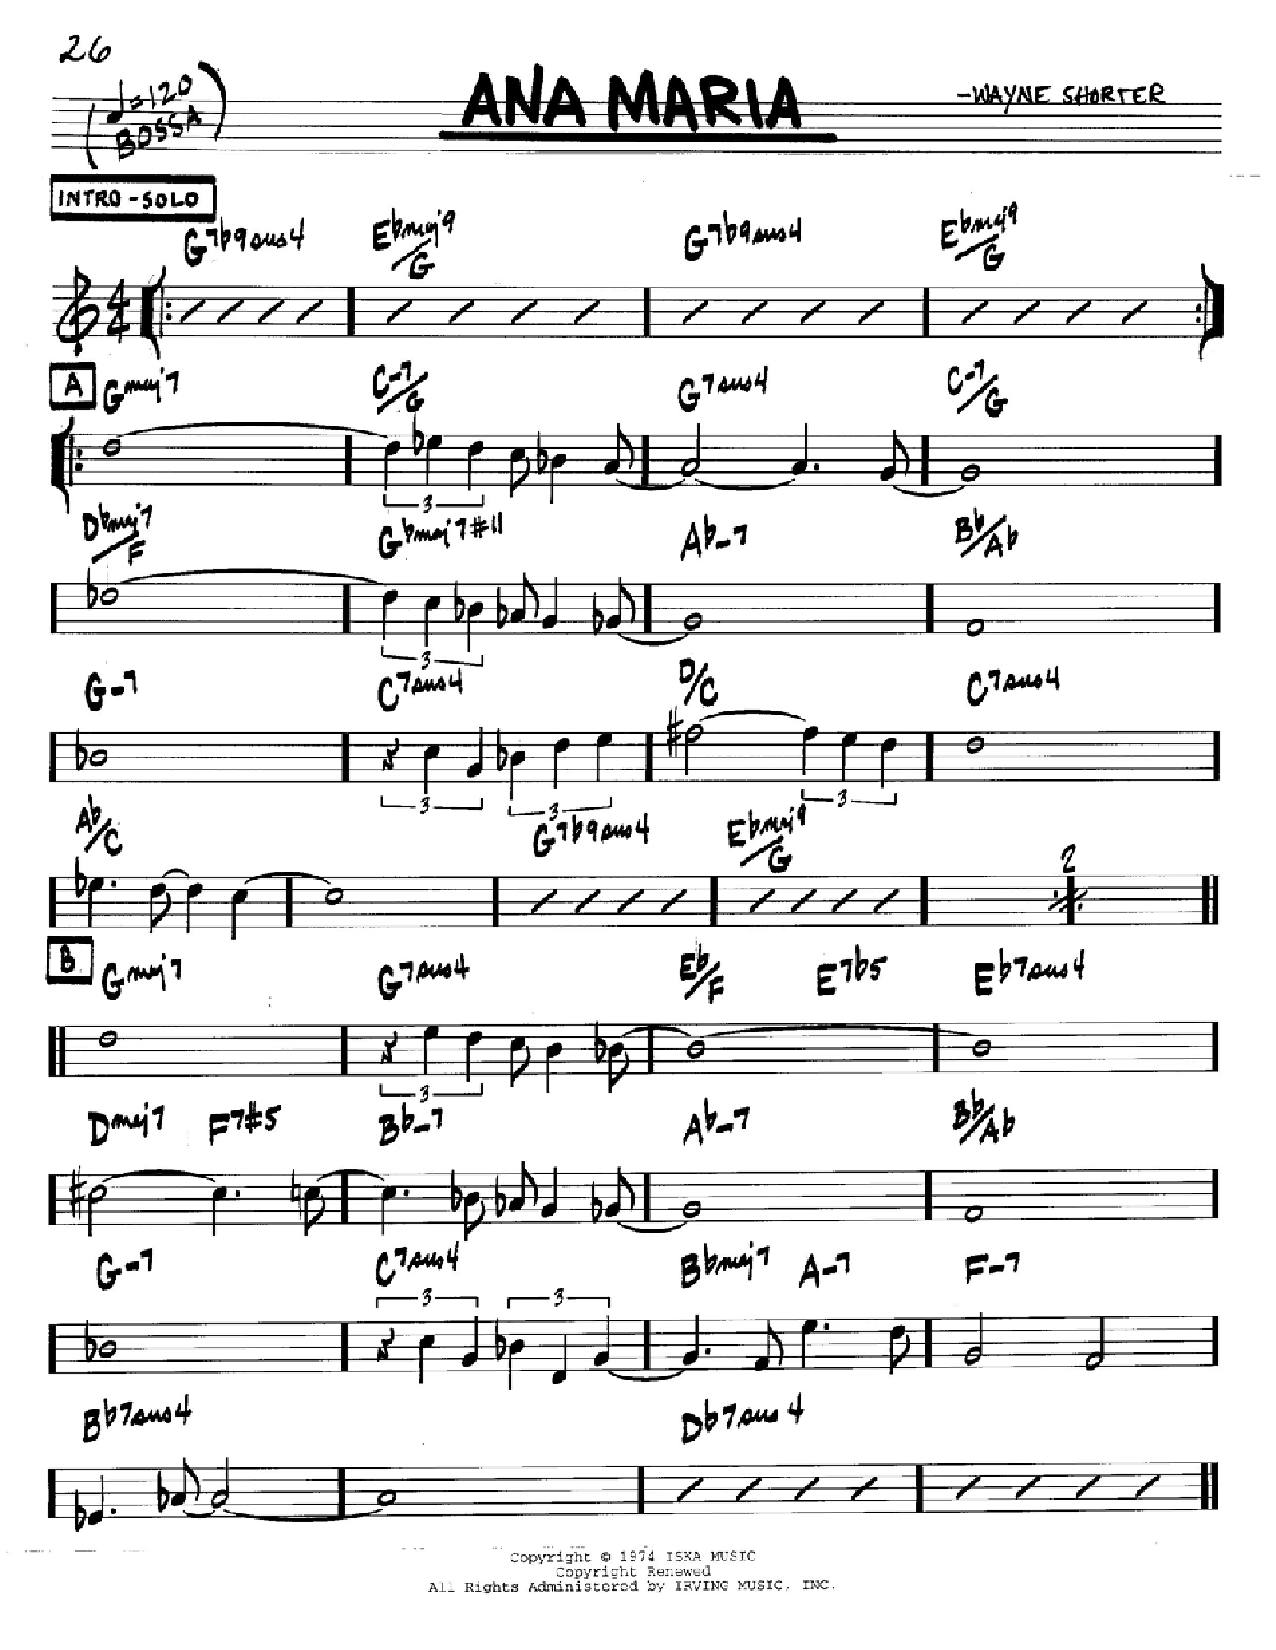 Wayne Shorter Ana Maria Sheet Music Notes & Chords for Real Book - Melody & Chords - Bass Clef Instruments - Download or Print PDF